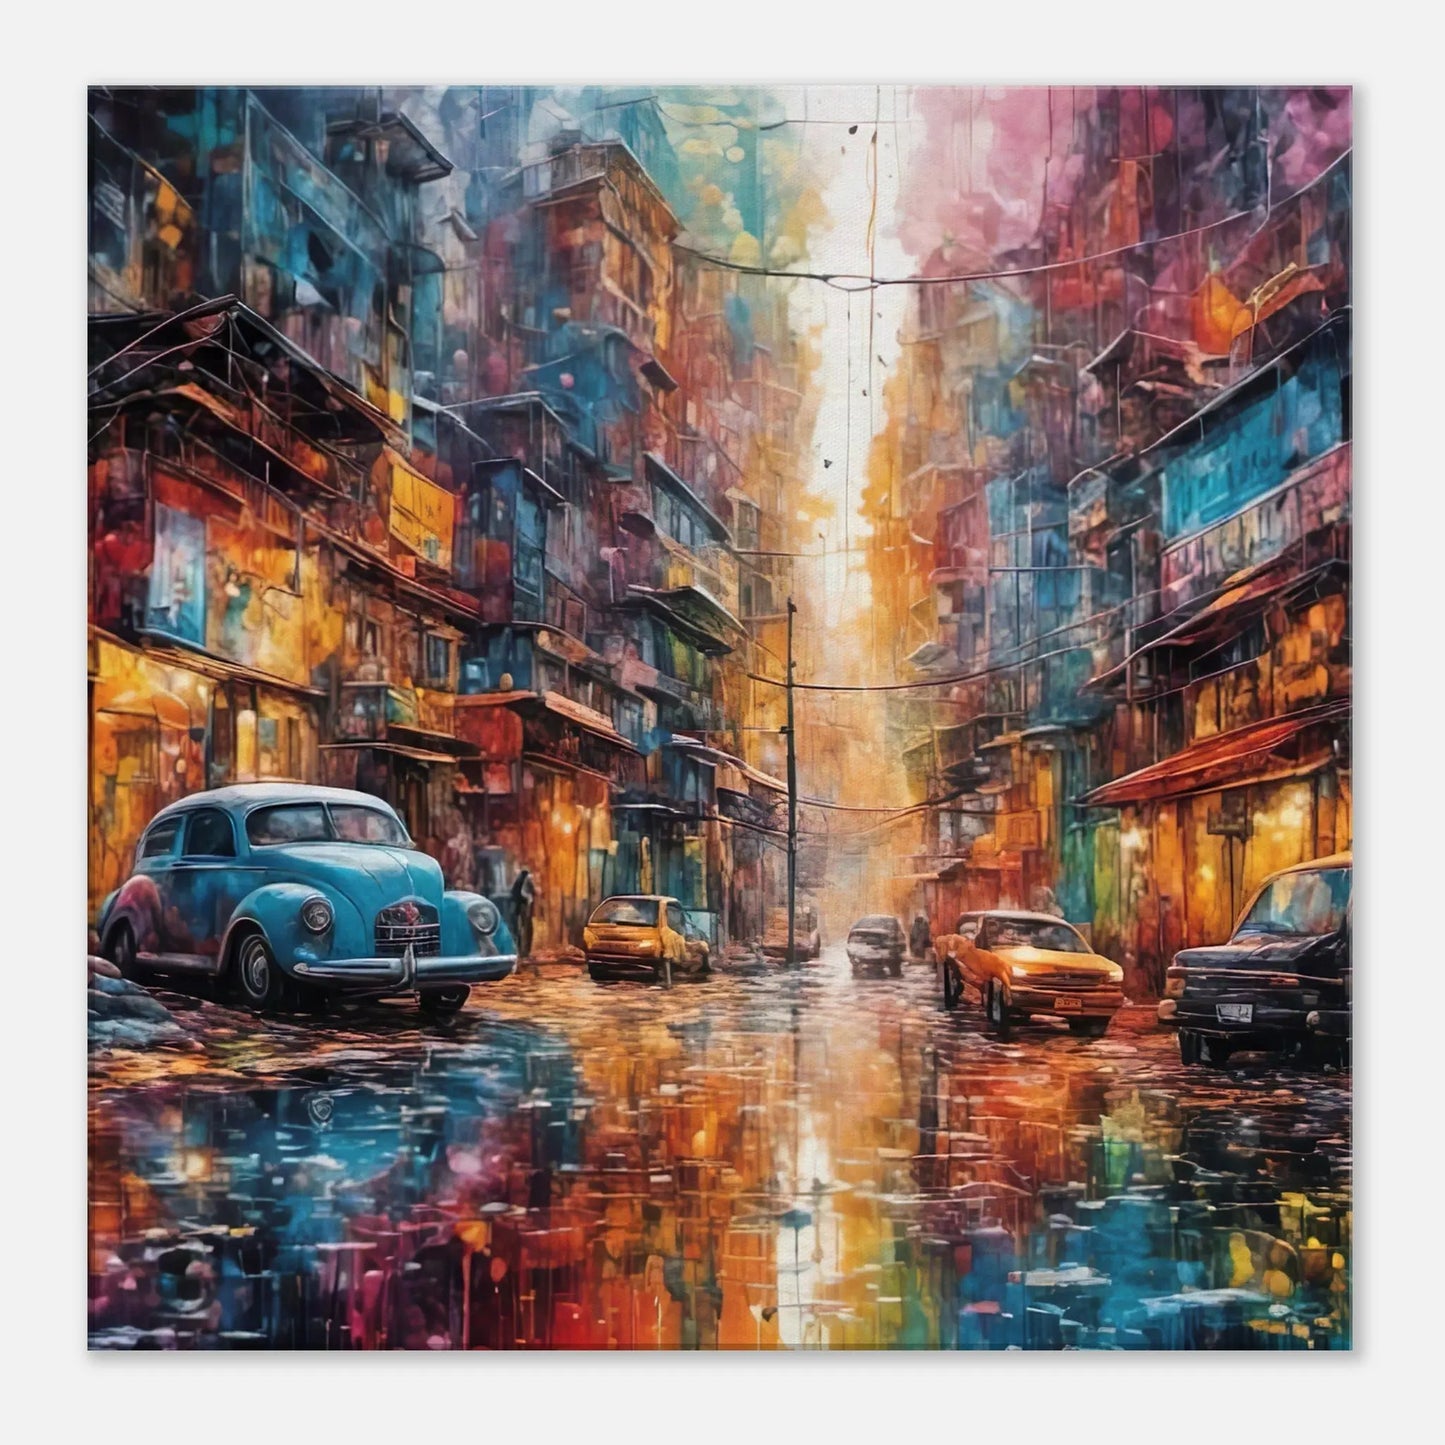 Leinwandbild - Farbenchaos auf der Straße - Splash Art Stil, KI-Kunst - RolConArt, Splash Art, 60x60-cm-24x24